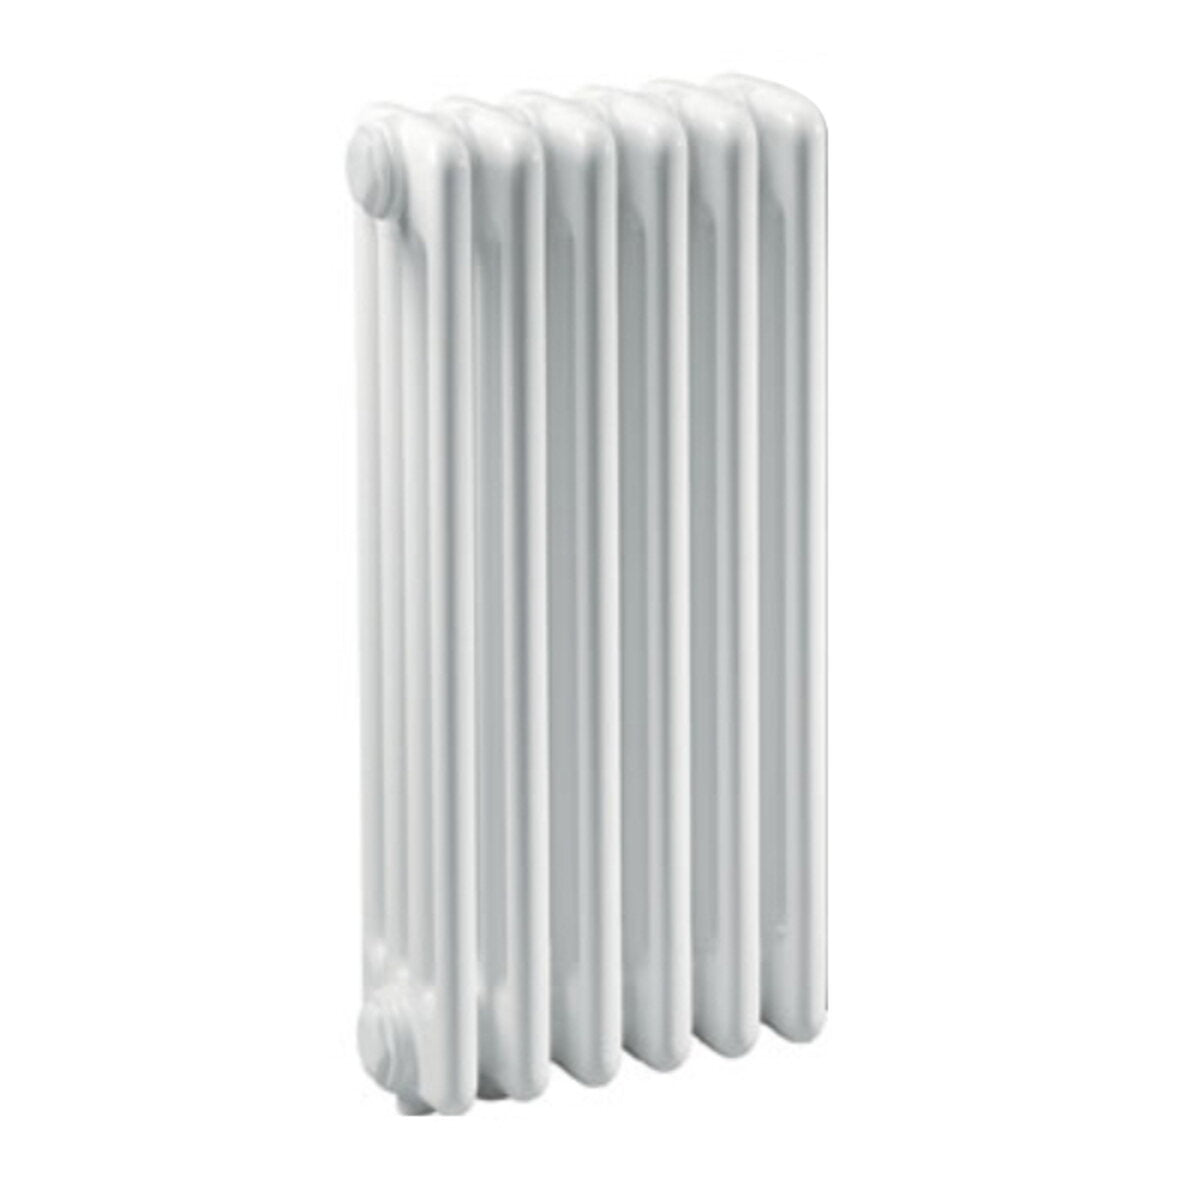 Ercos Comby steel column radiator 6 elements 3 columns center distance 600 mm